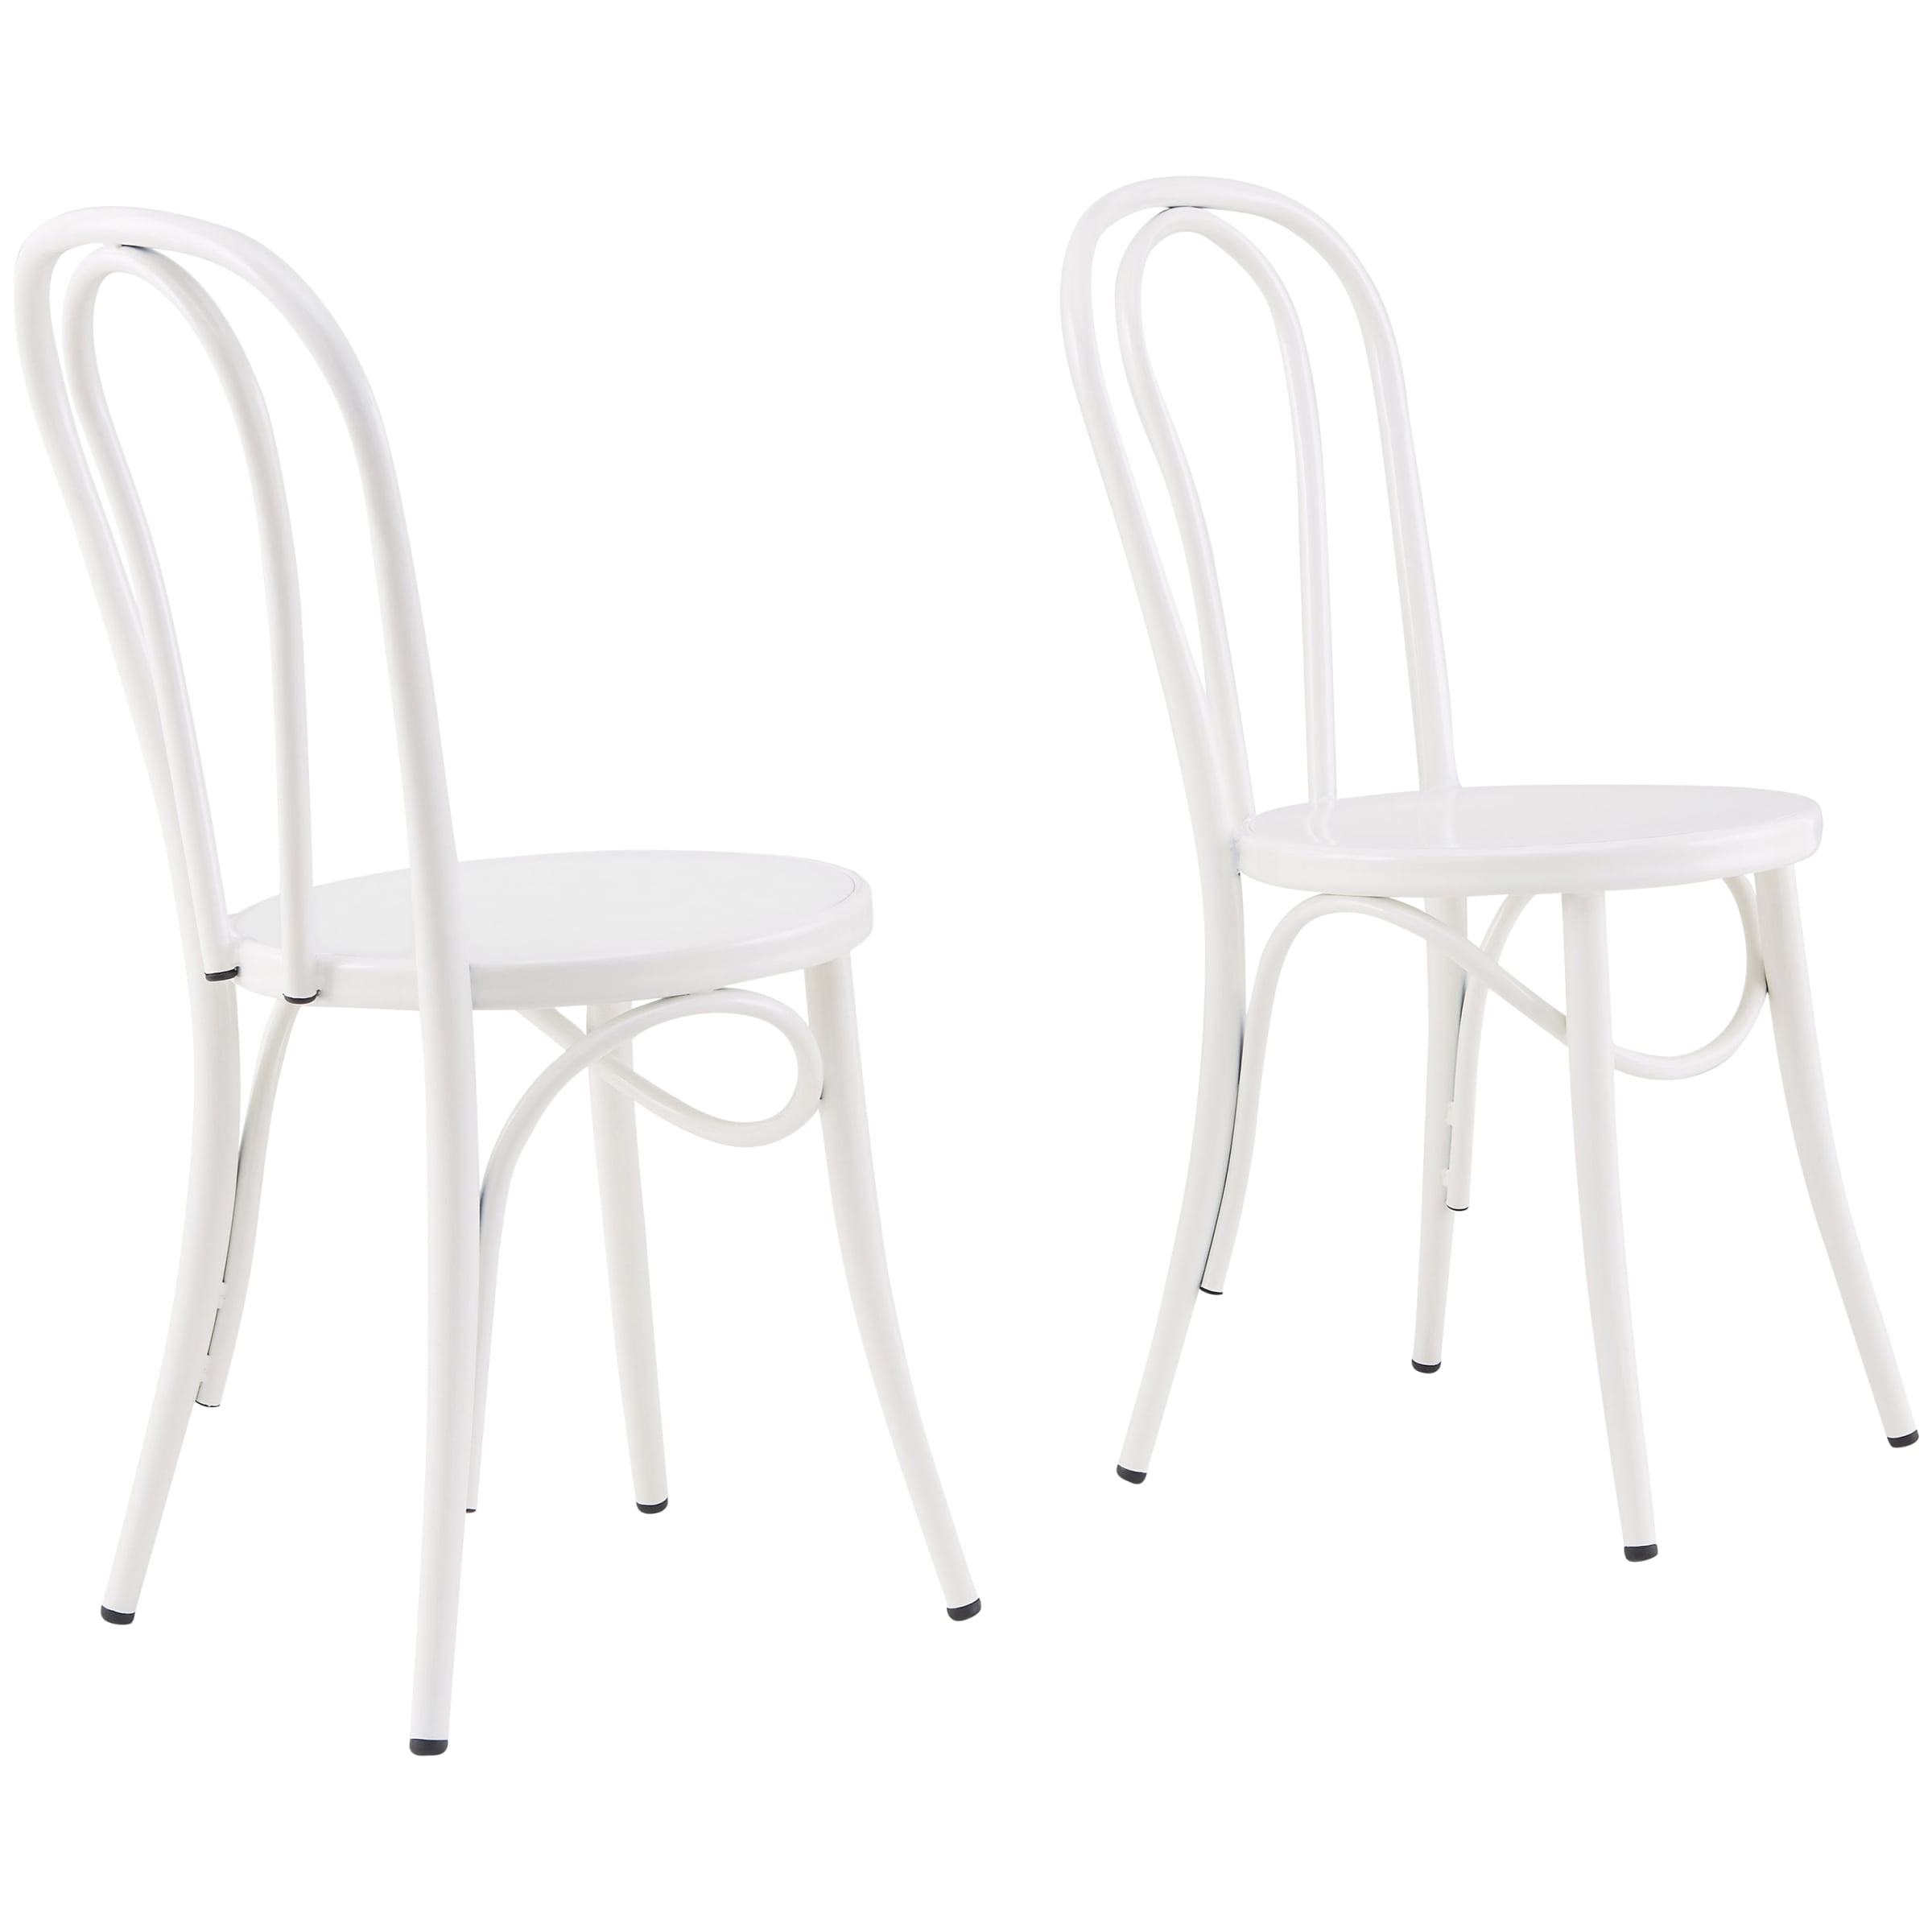 Better Homes & Gardens Arabella Chairs, Set of 2, White - Walmart.com